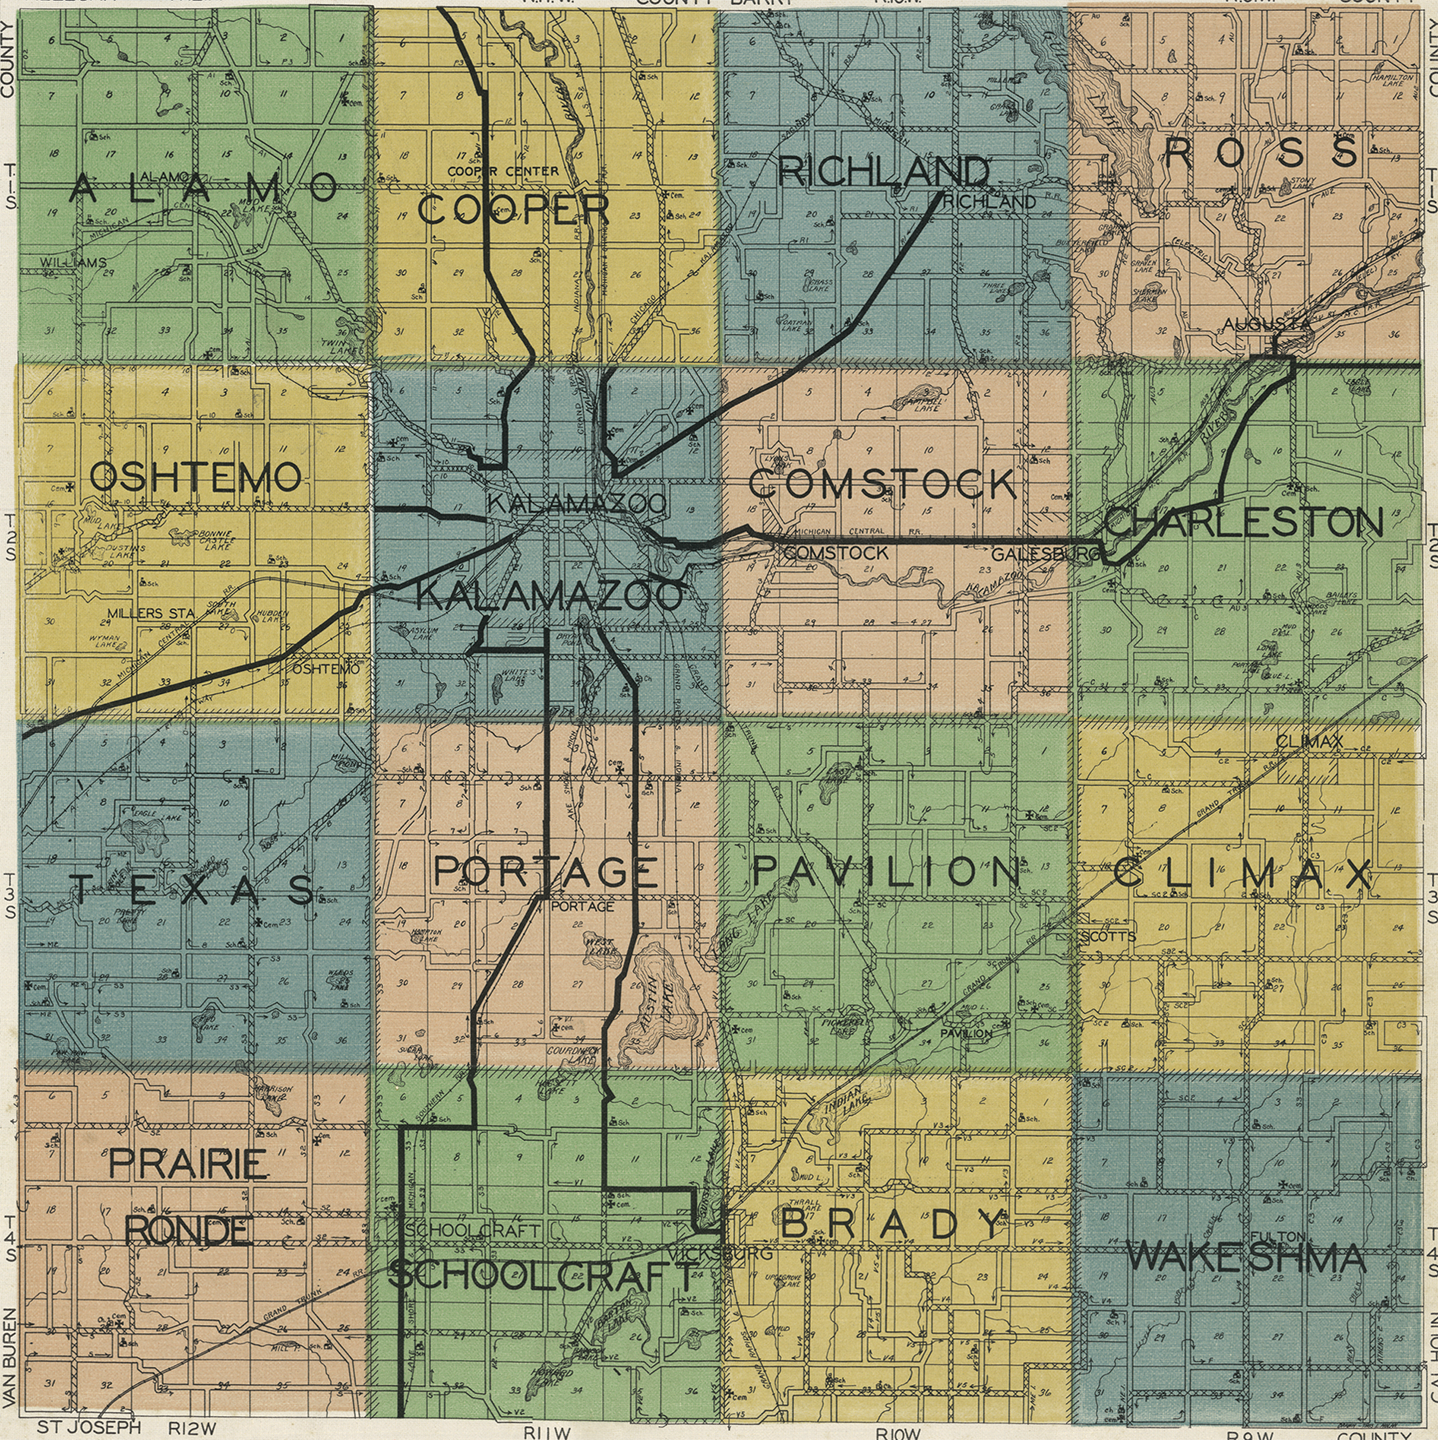 1928 Kalamazoo County Michigan landownership map